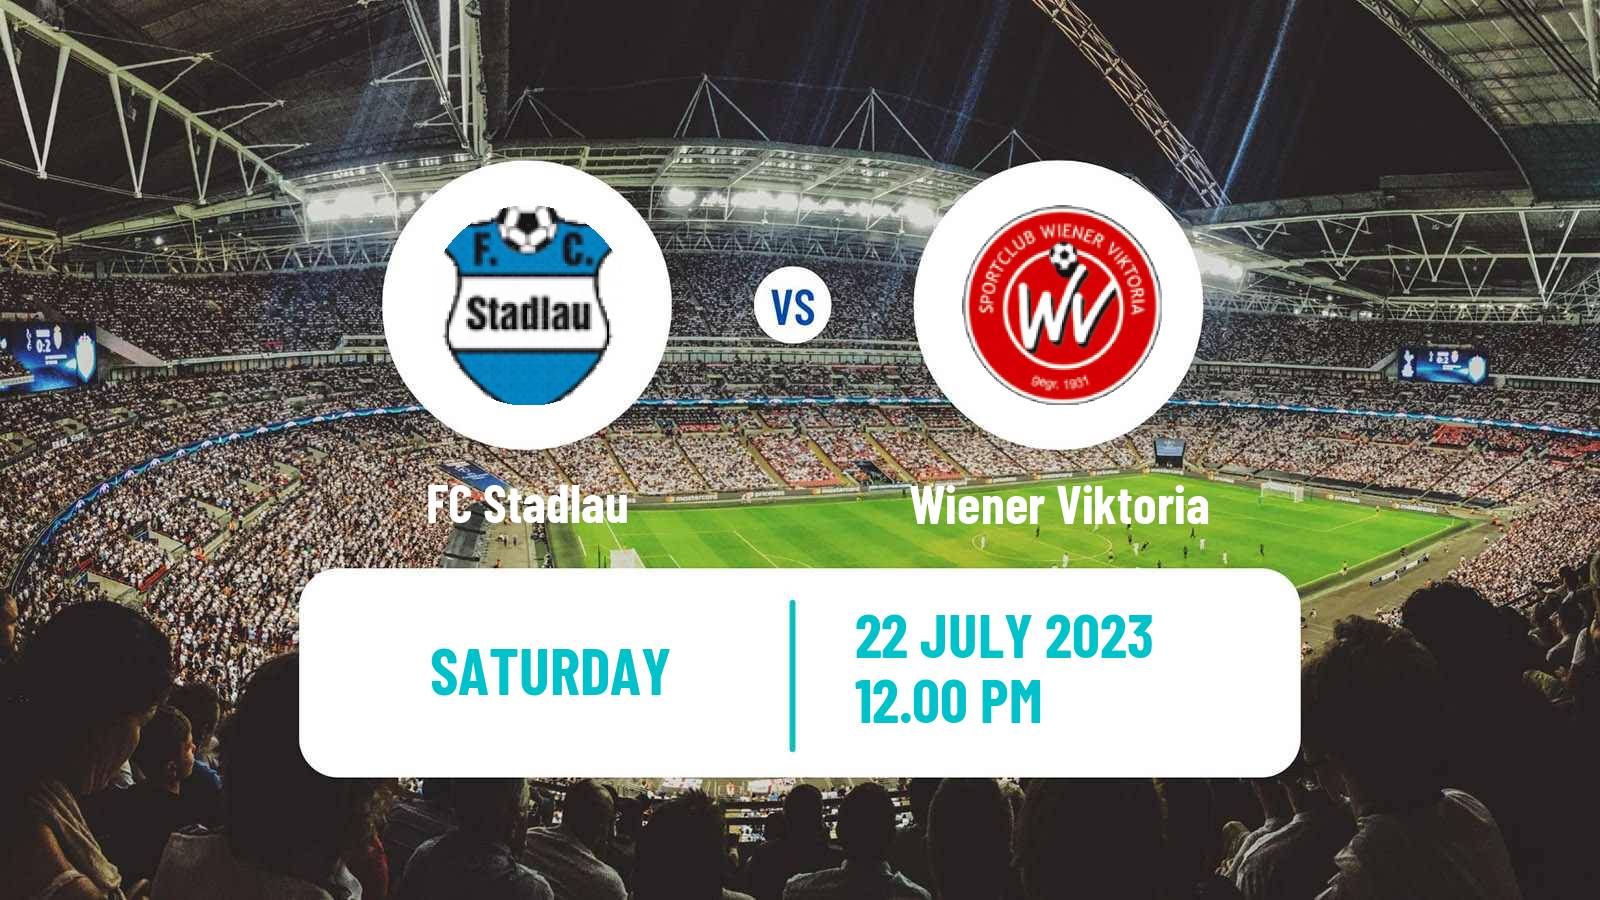 Soccer Club Friendly Stadlau - Wiener Viktoria